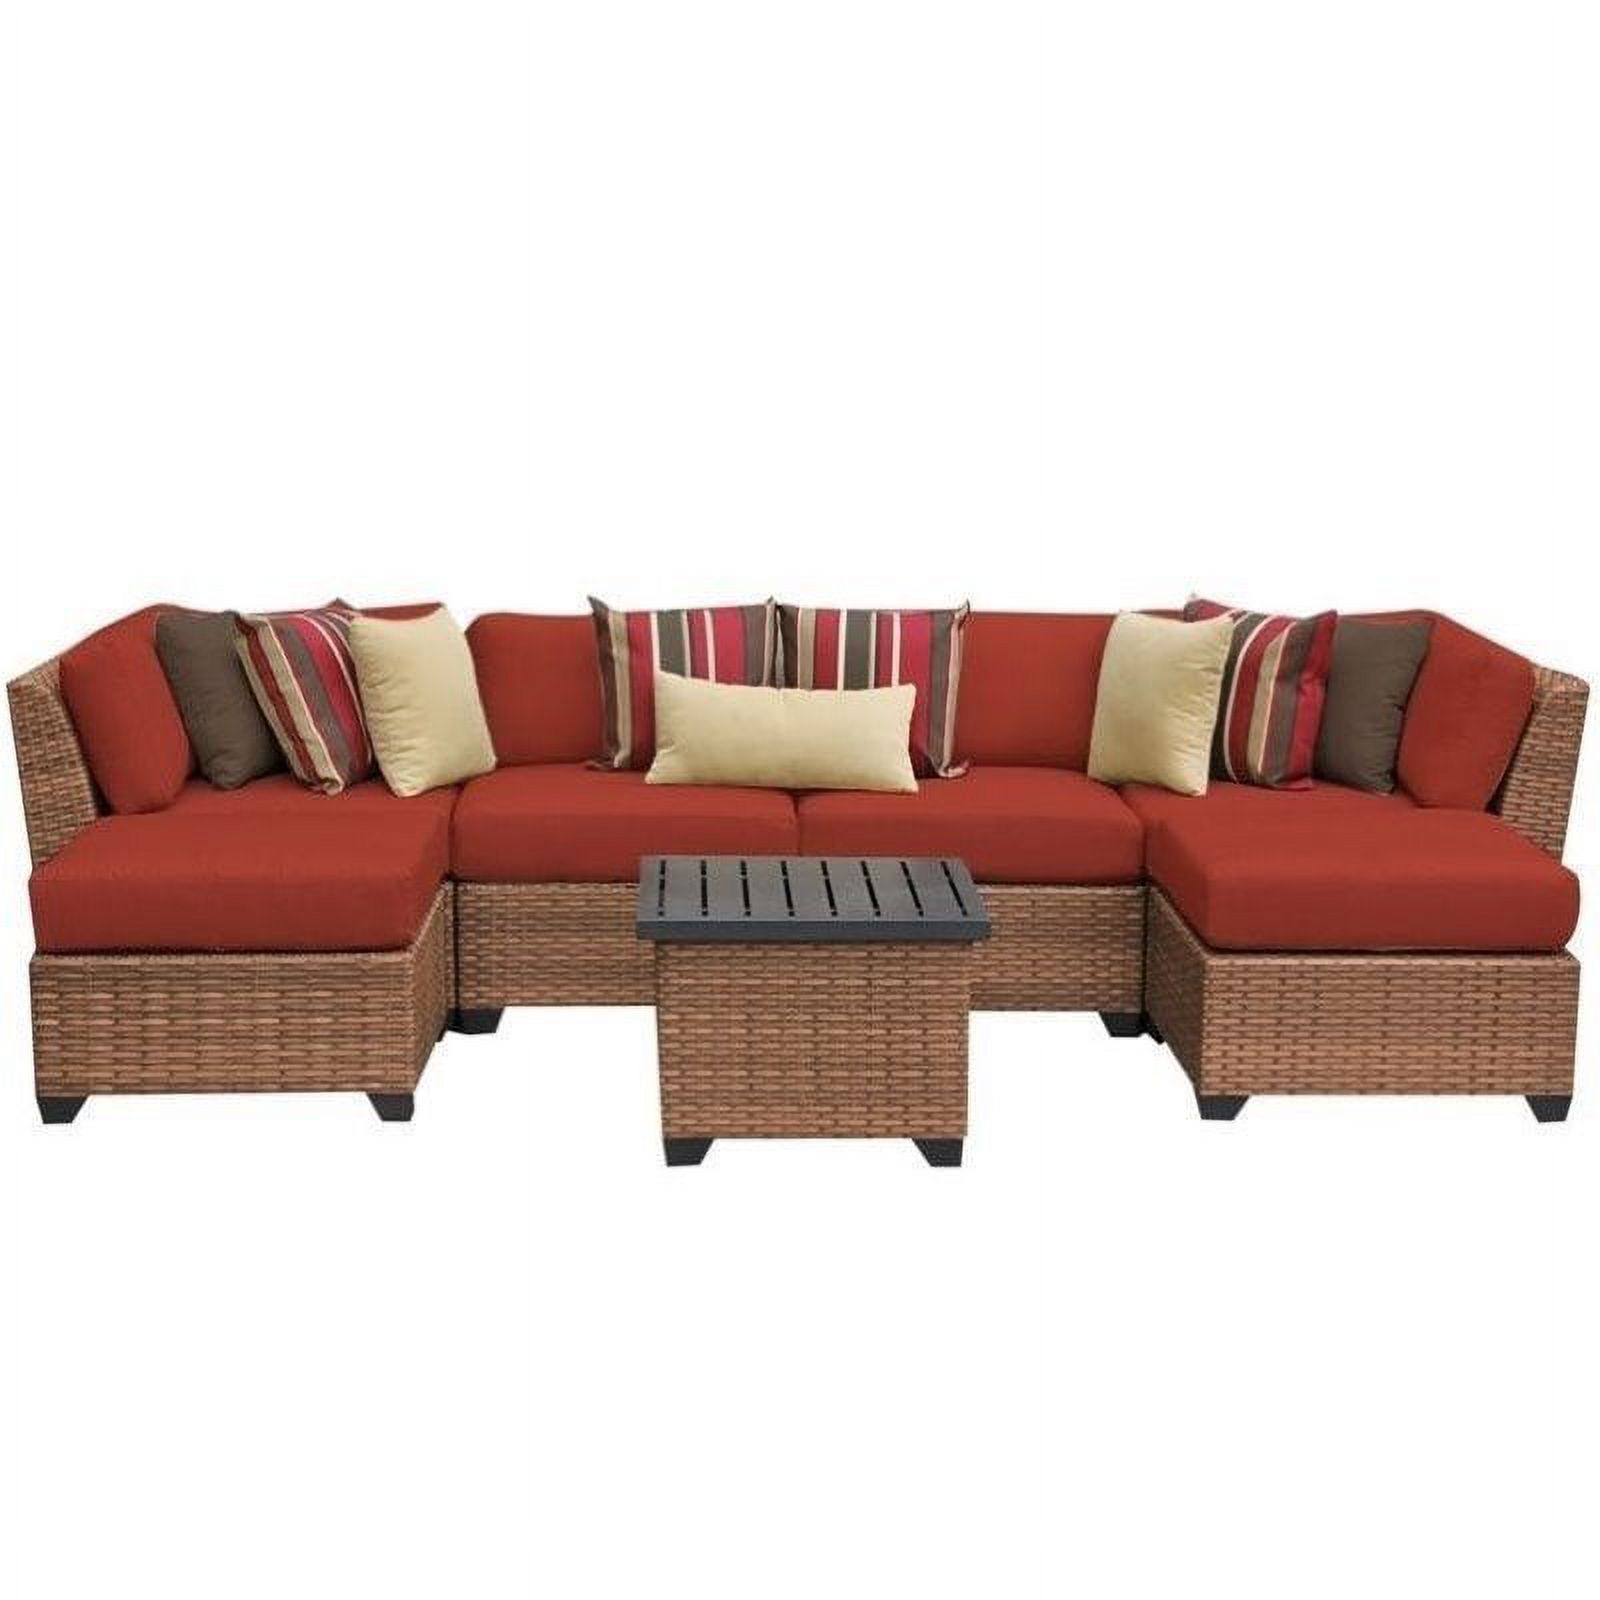 Bowery Hill 7 Piece Coastal Wicker/Fabric Outdoor Sofa Set in Terracotta Orange - image 1 of 2